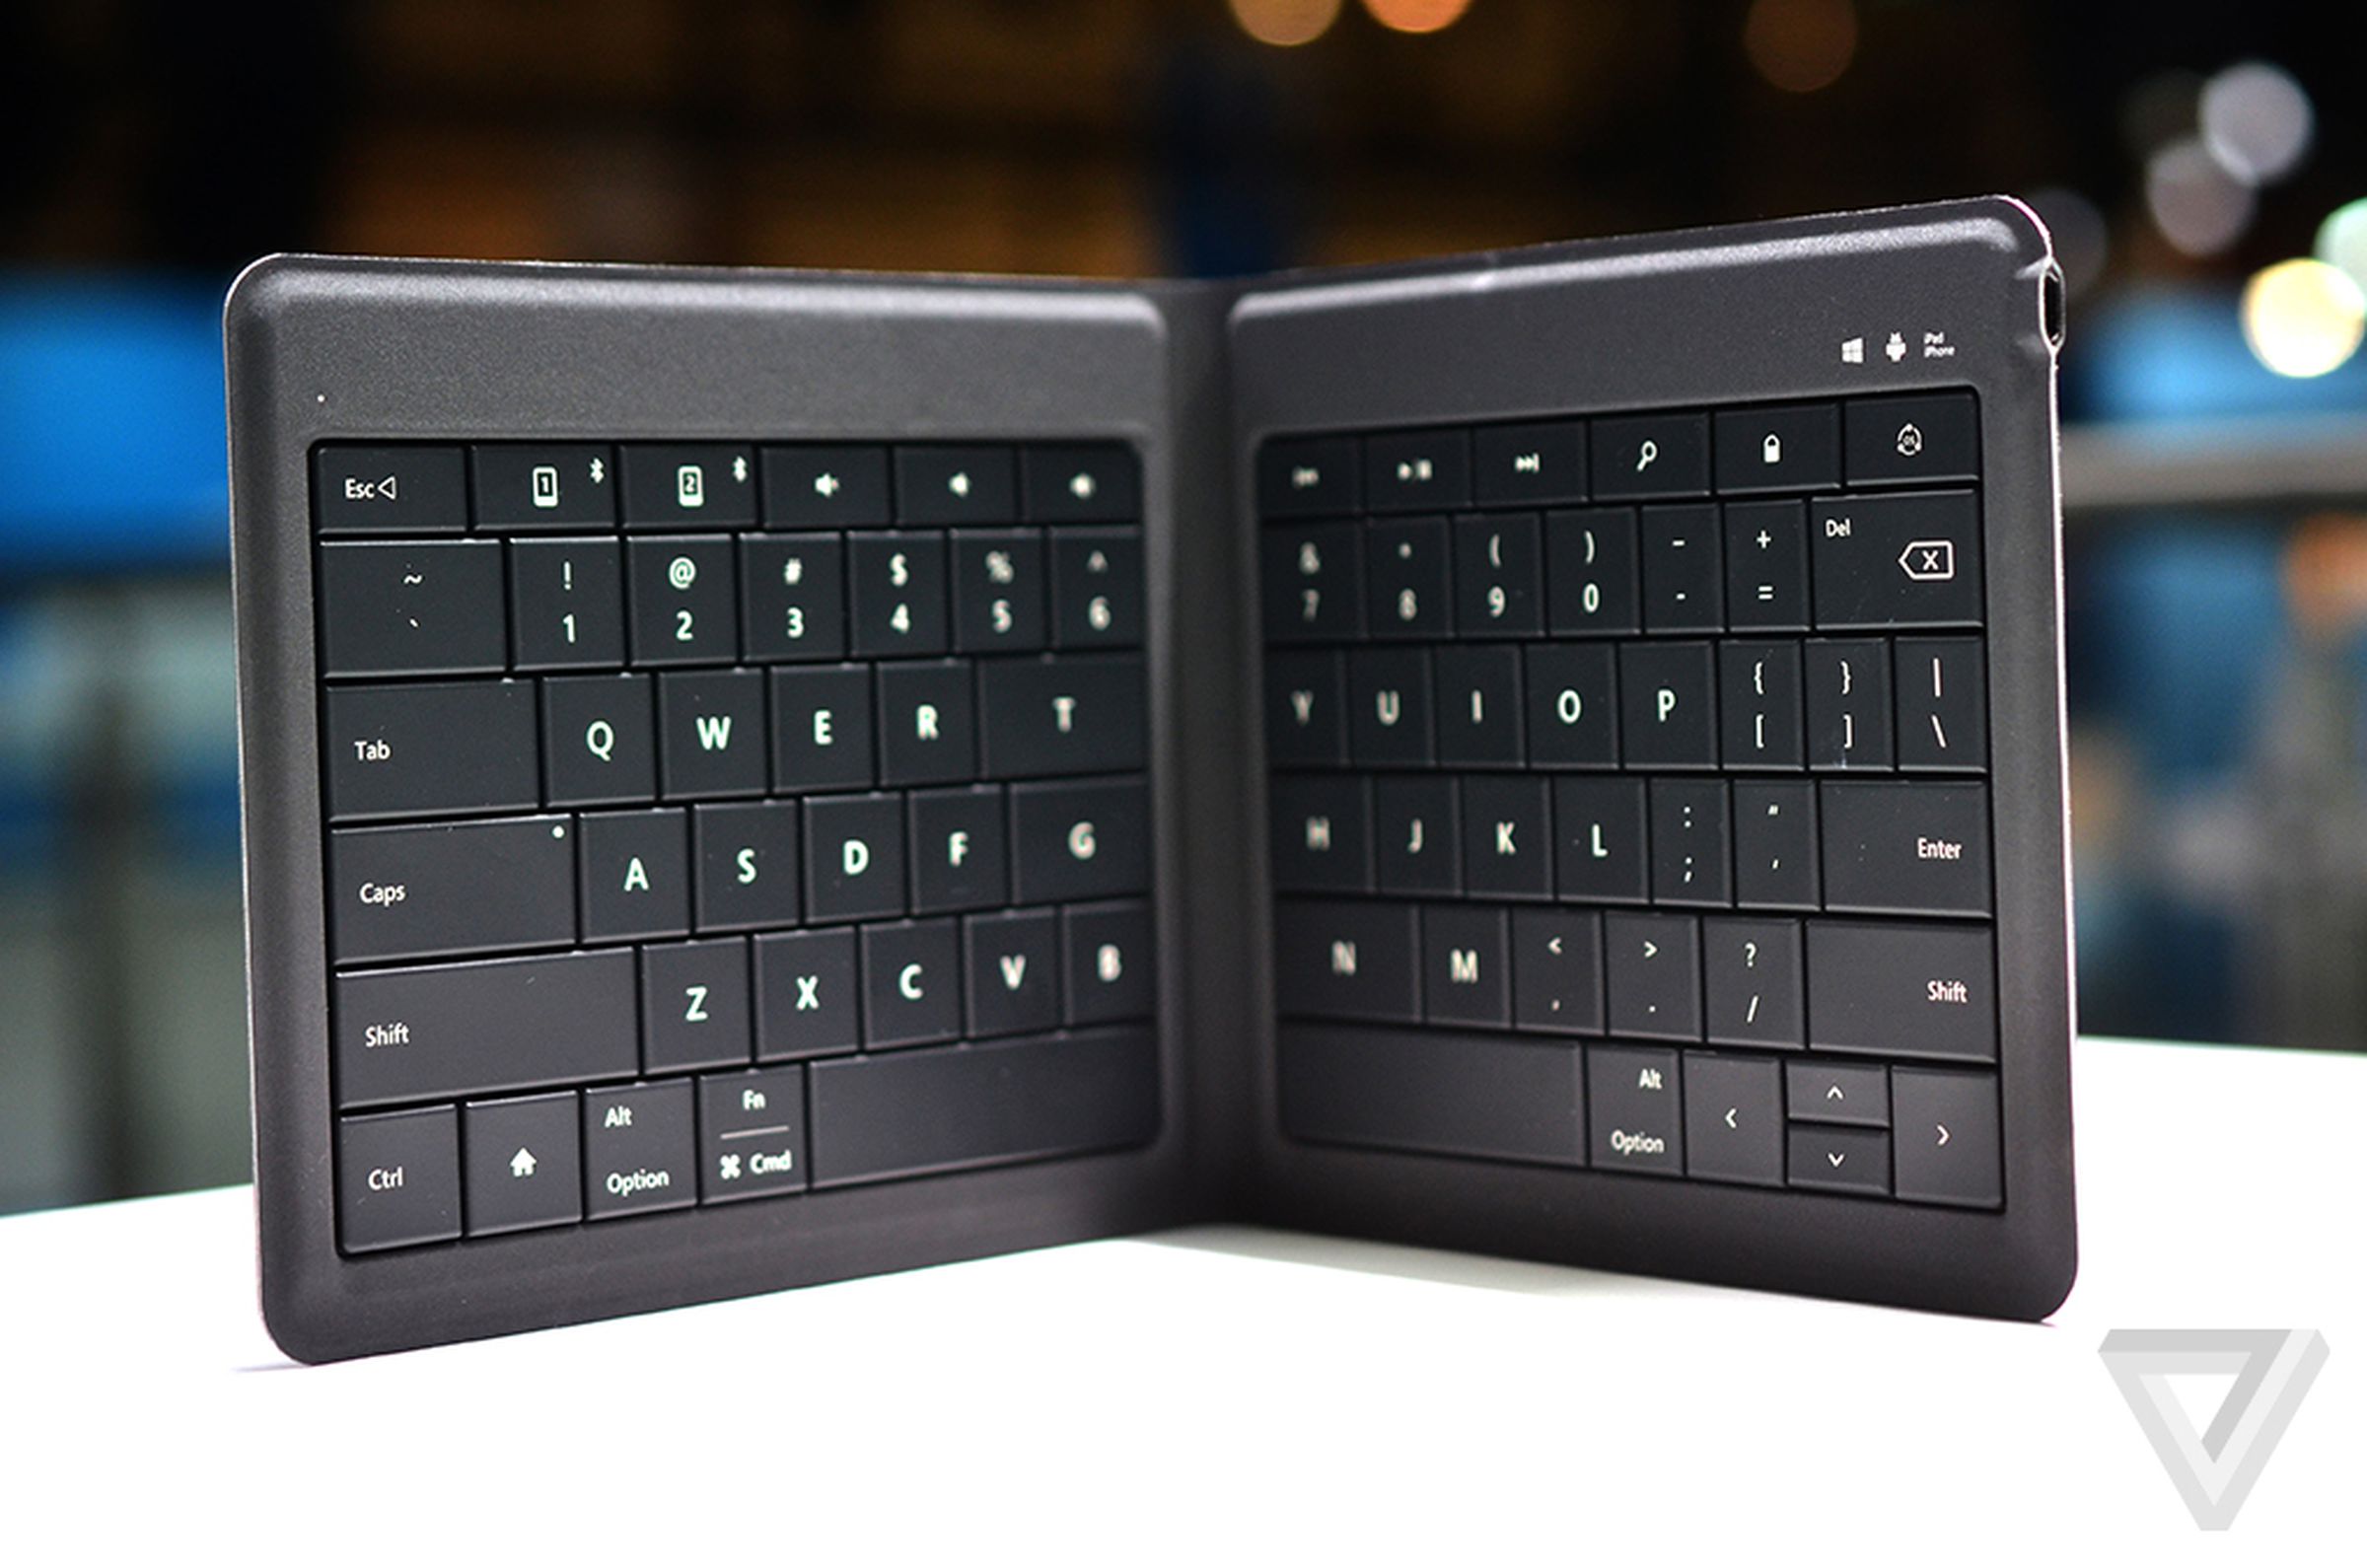 Microsoft Universal Foldable Keyboard hands-on photos